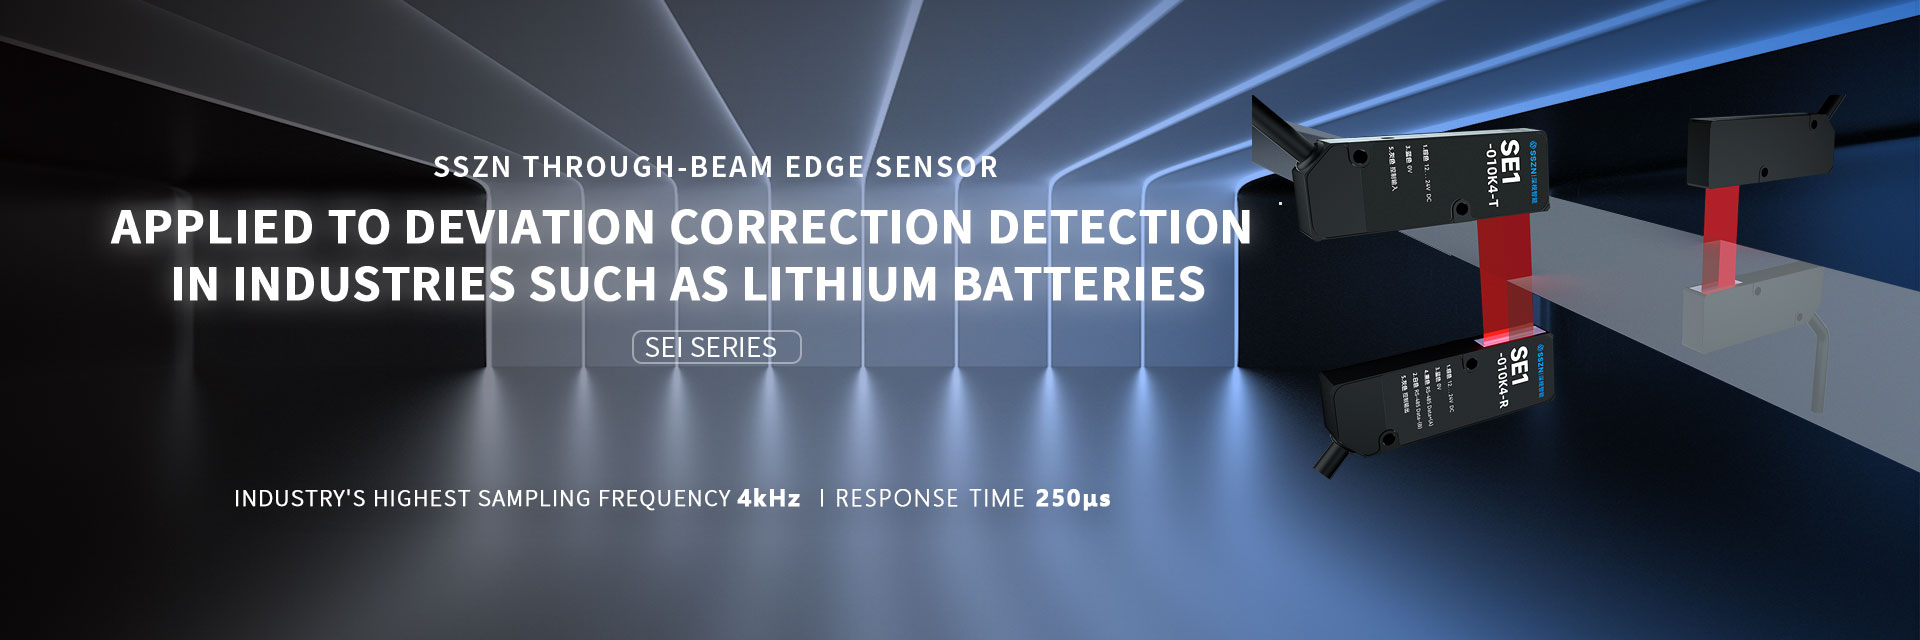 Through-Beam Edge Sensor